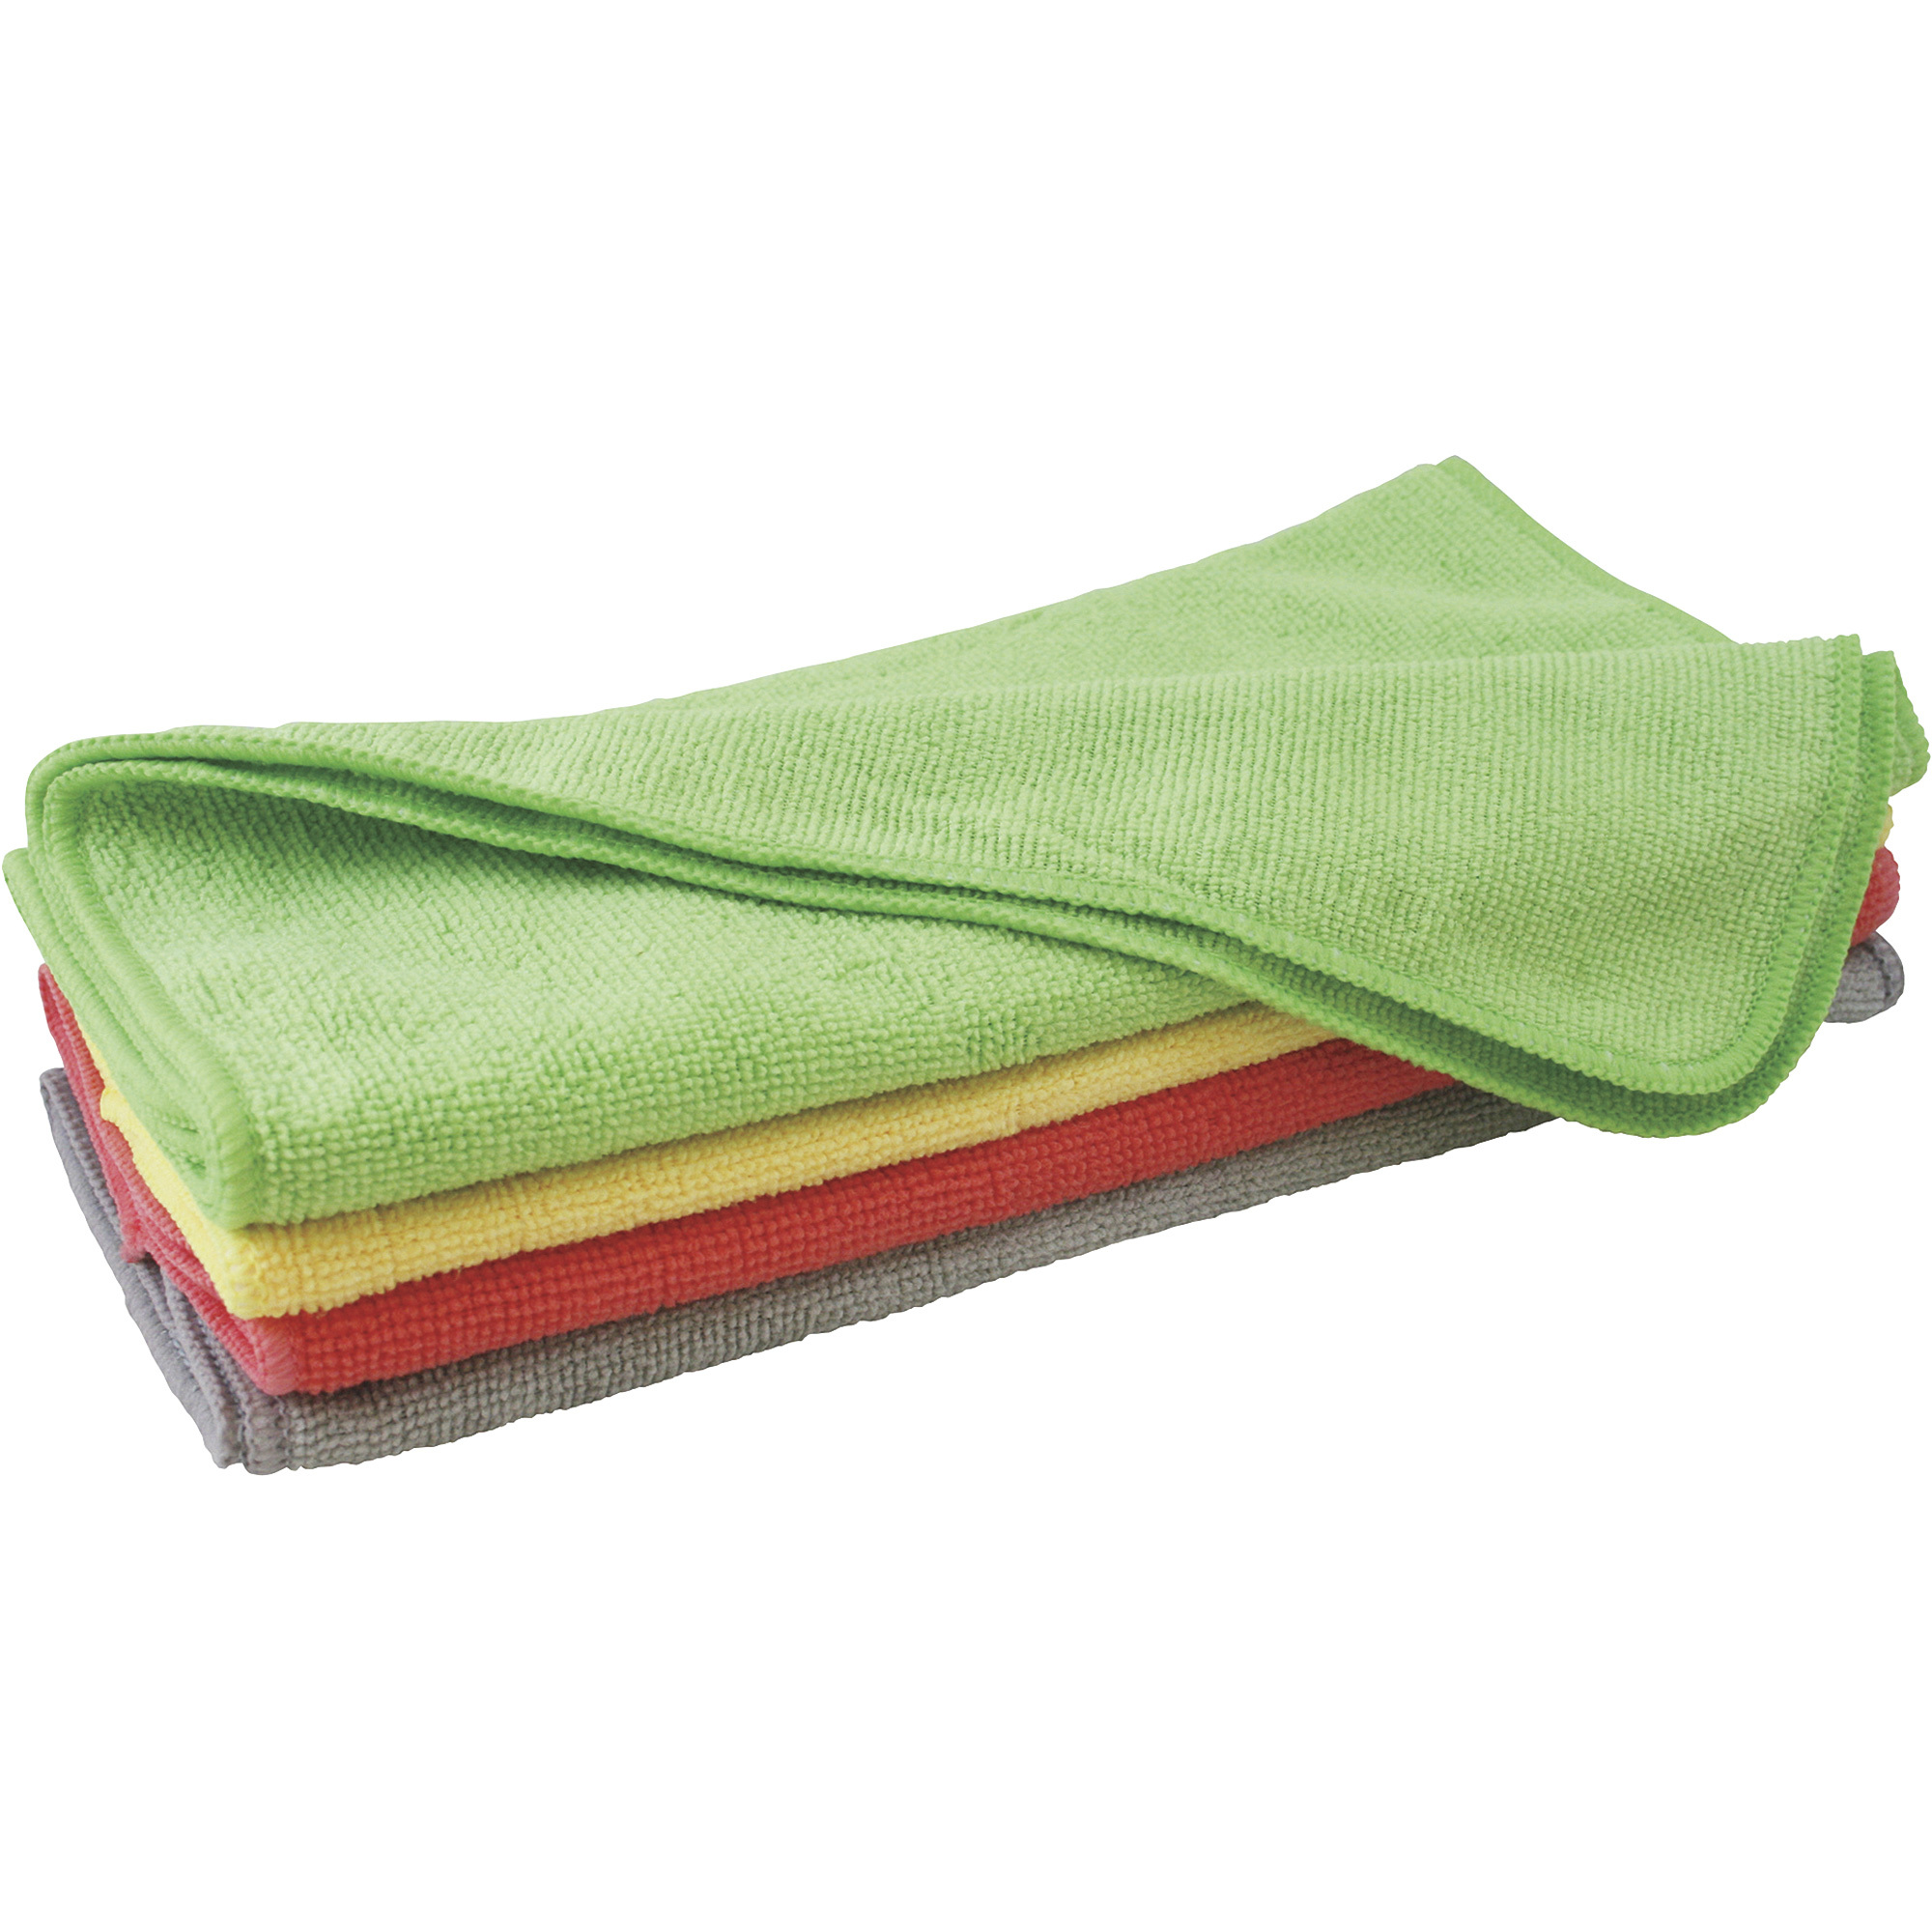 Detailer's Choice 12-Pack Microfiber Towels â16Inch L x 12Inch W, Model 45067